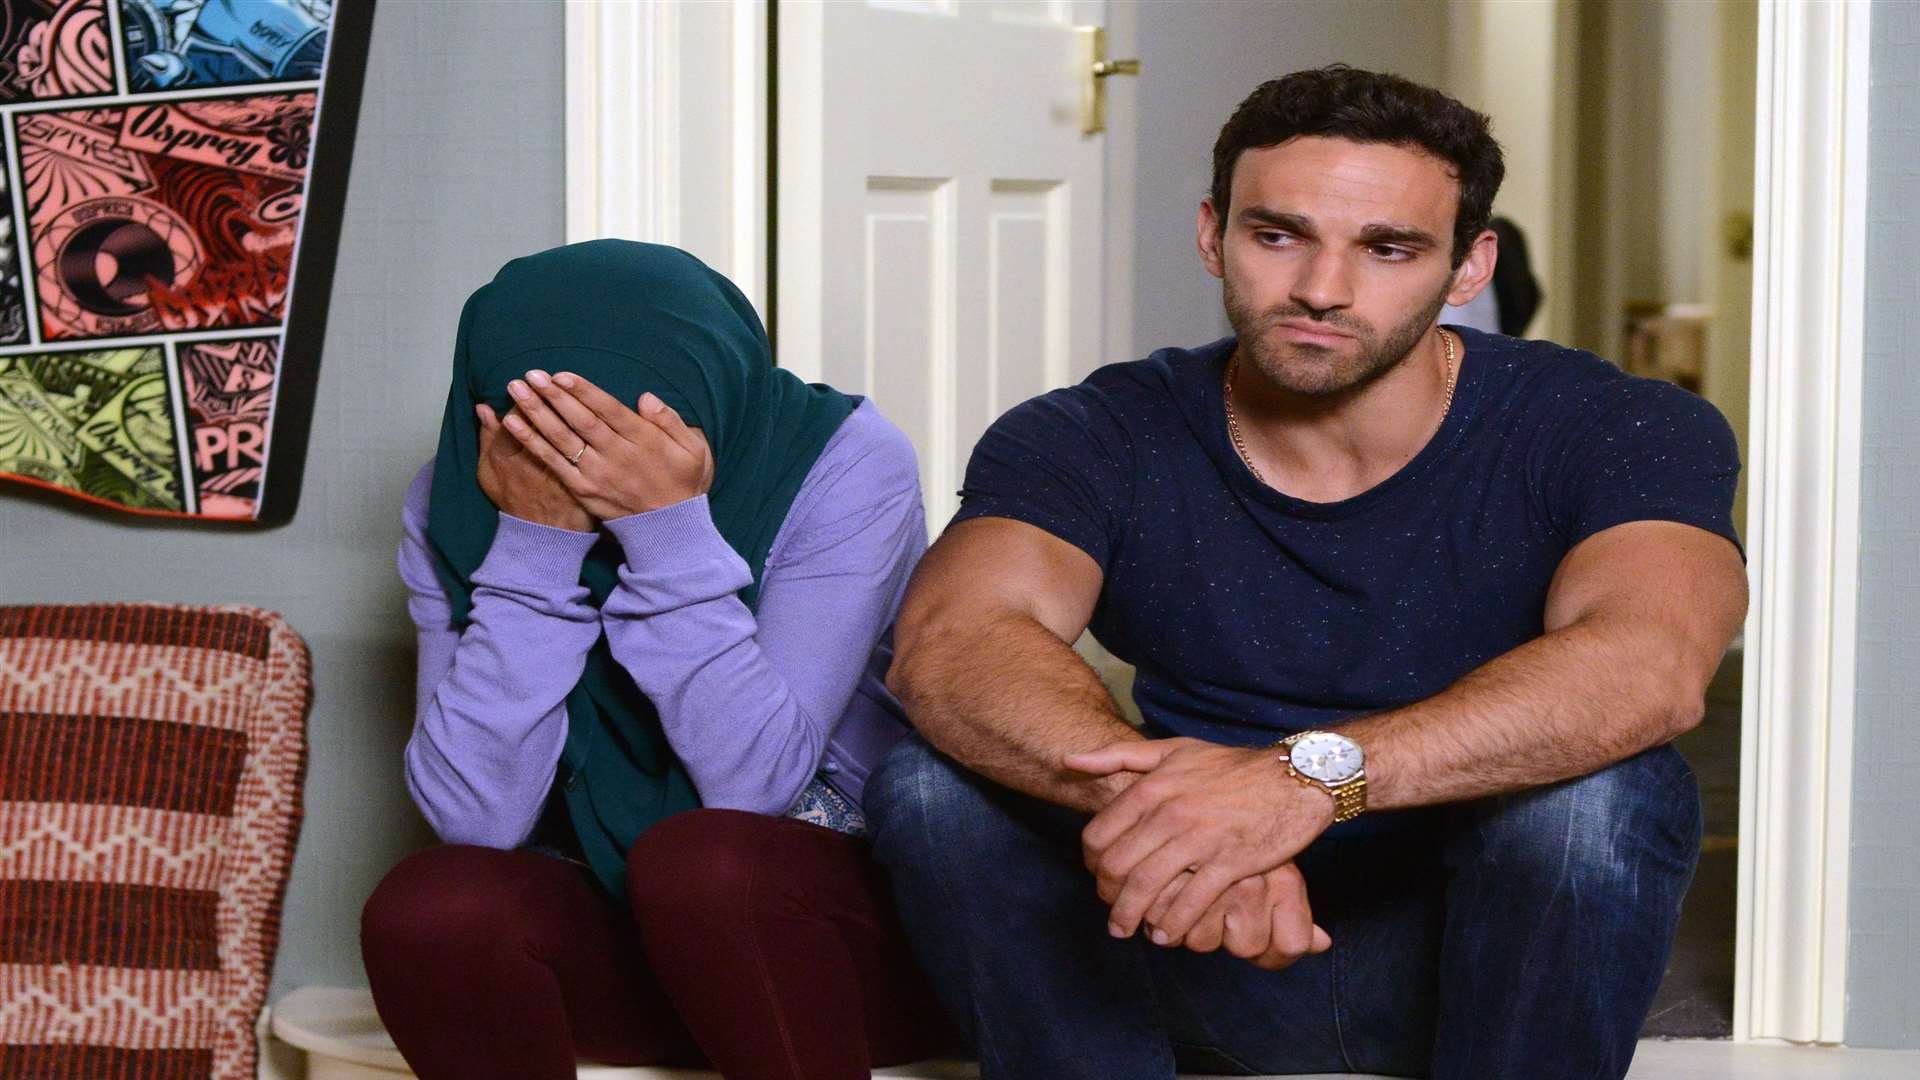 Shabnam and Kush Kazemi broke hearts across the nation as they dealt with their stillbirth tragedy